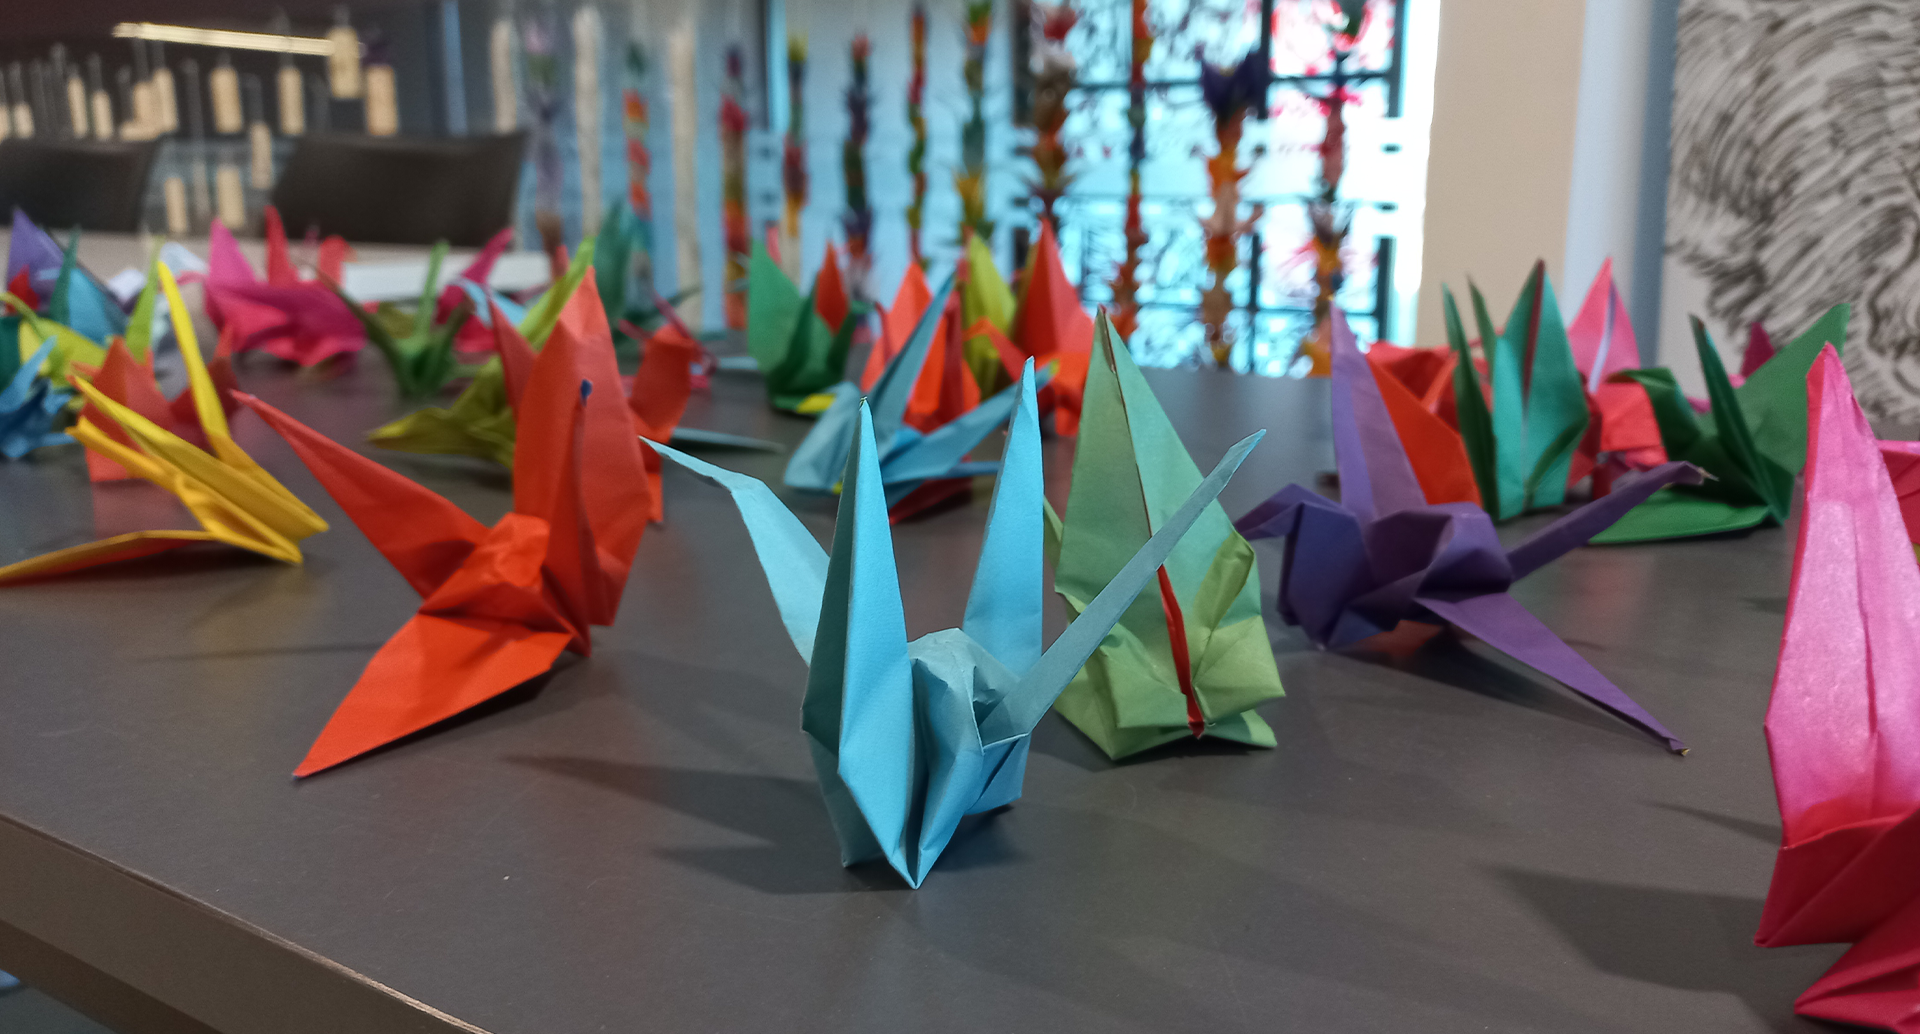 Origami peace cranes